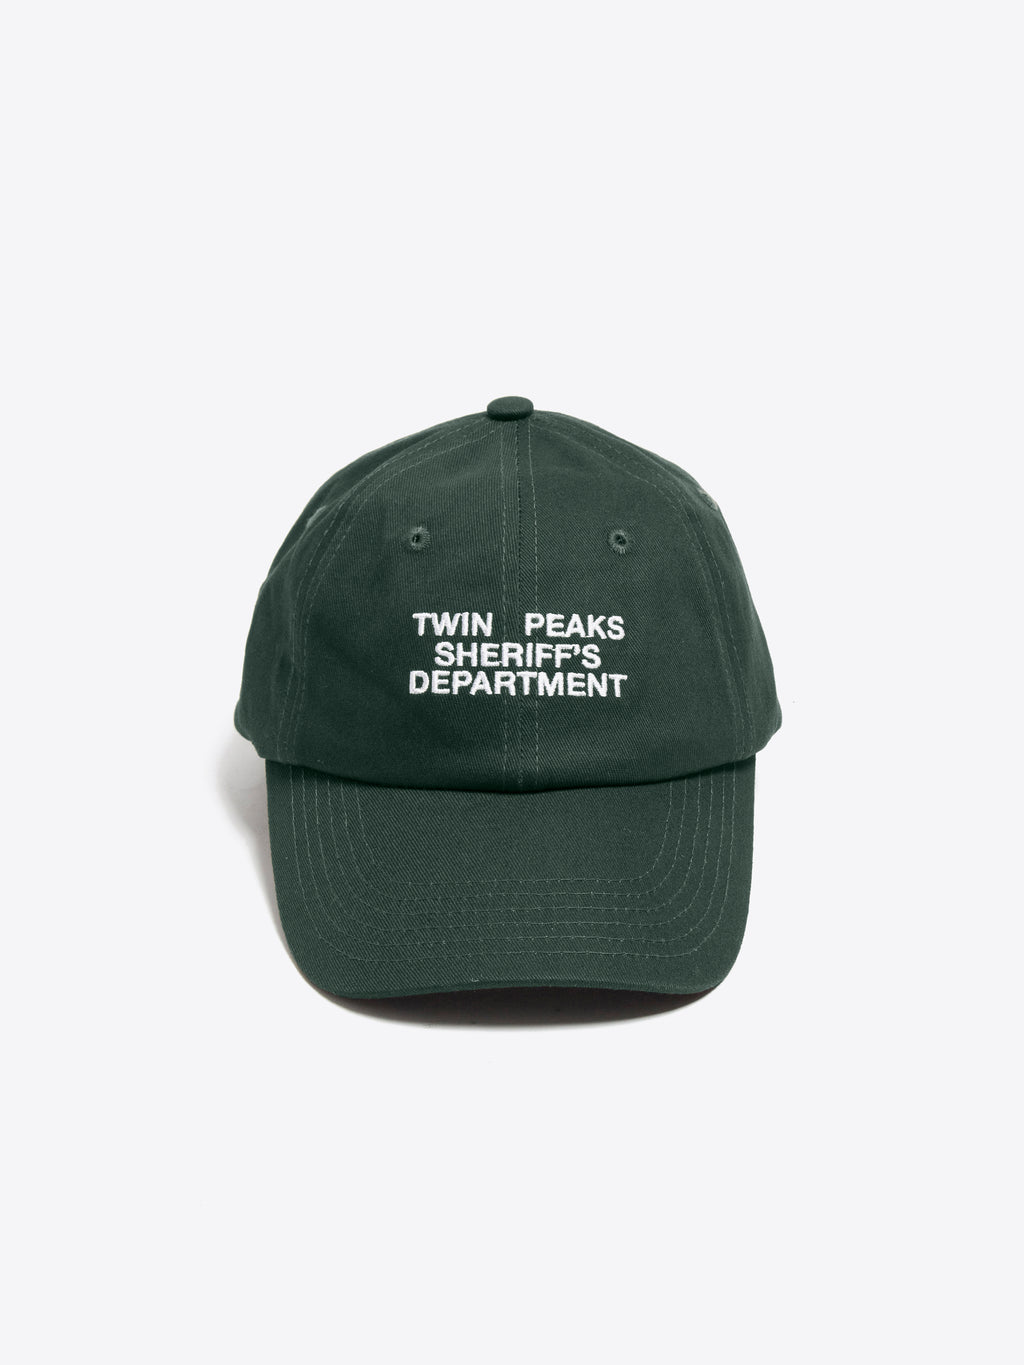 Sheriff's Department Cap - Pine